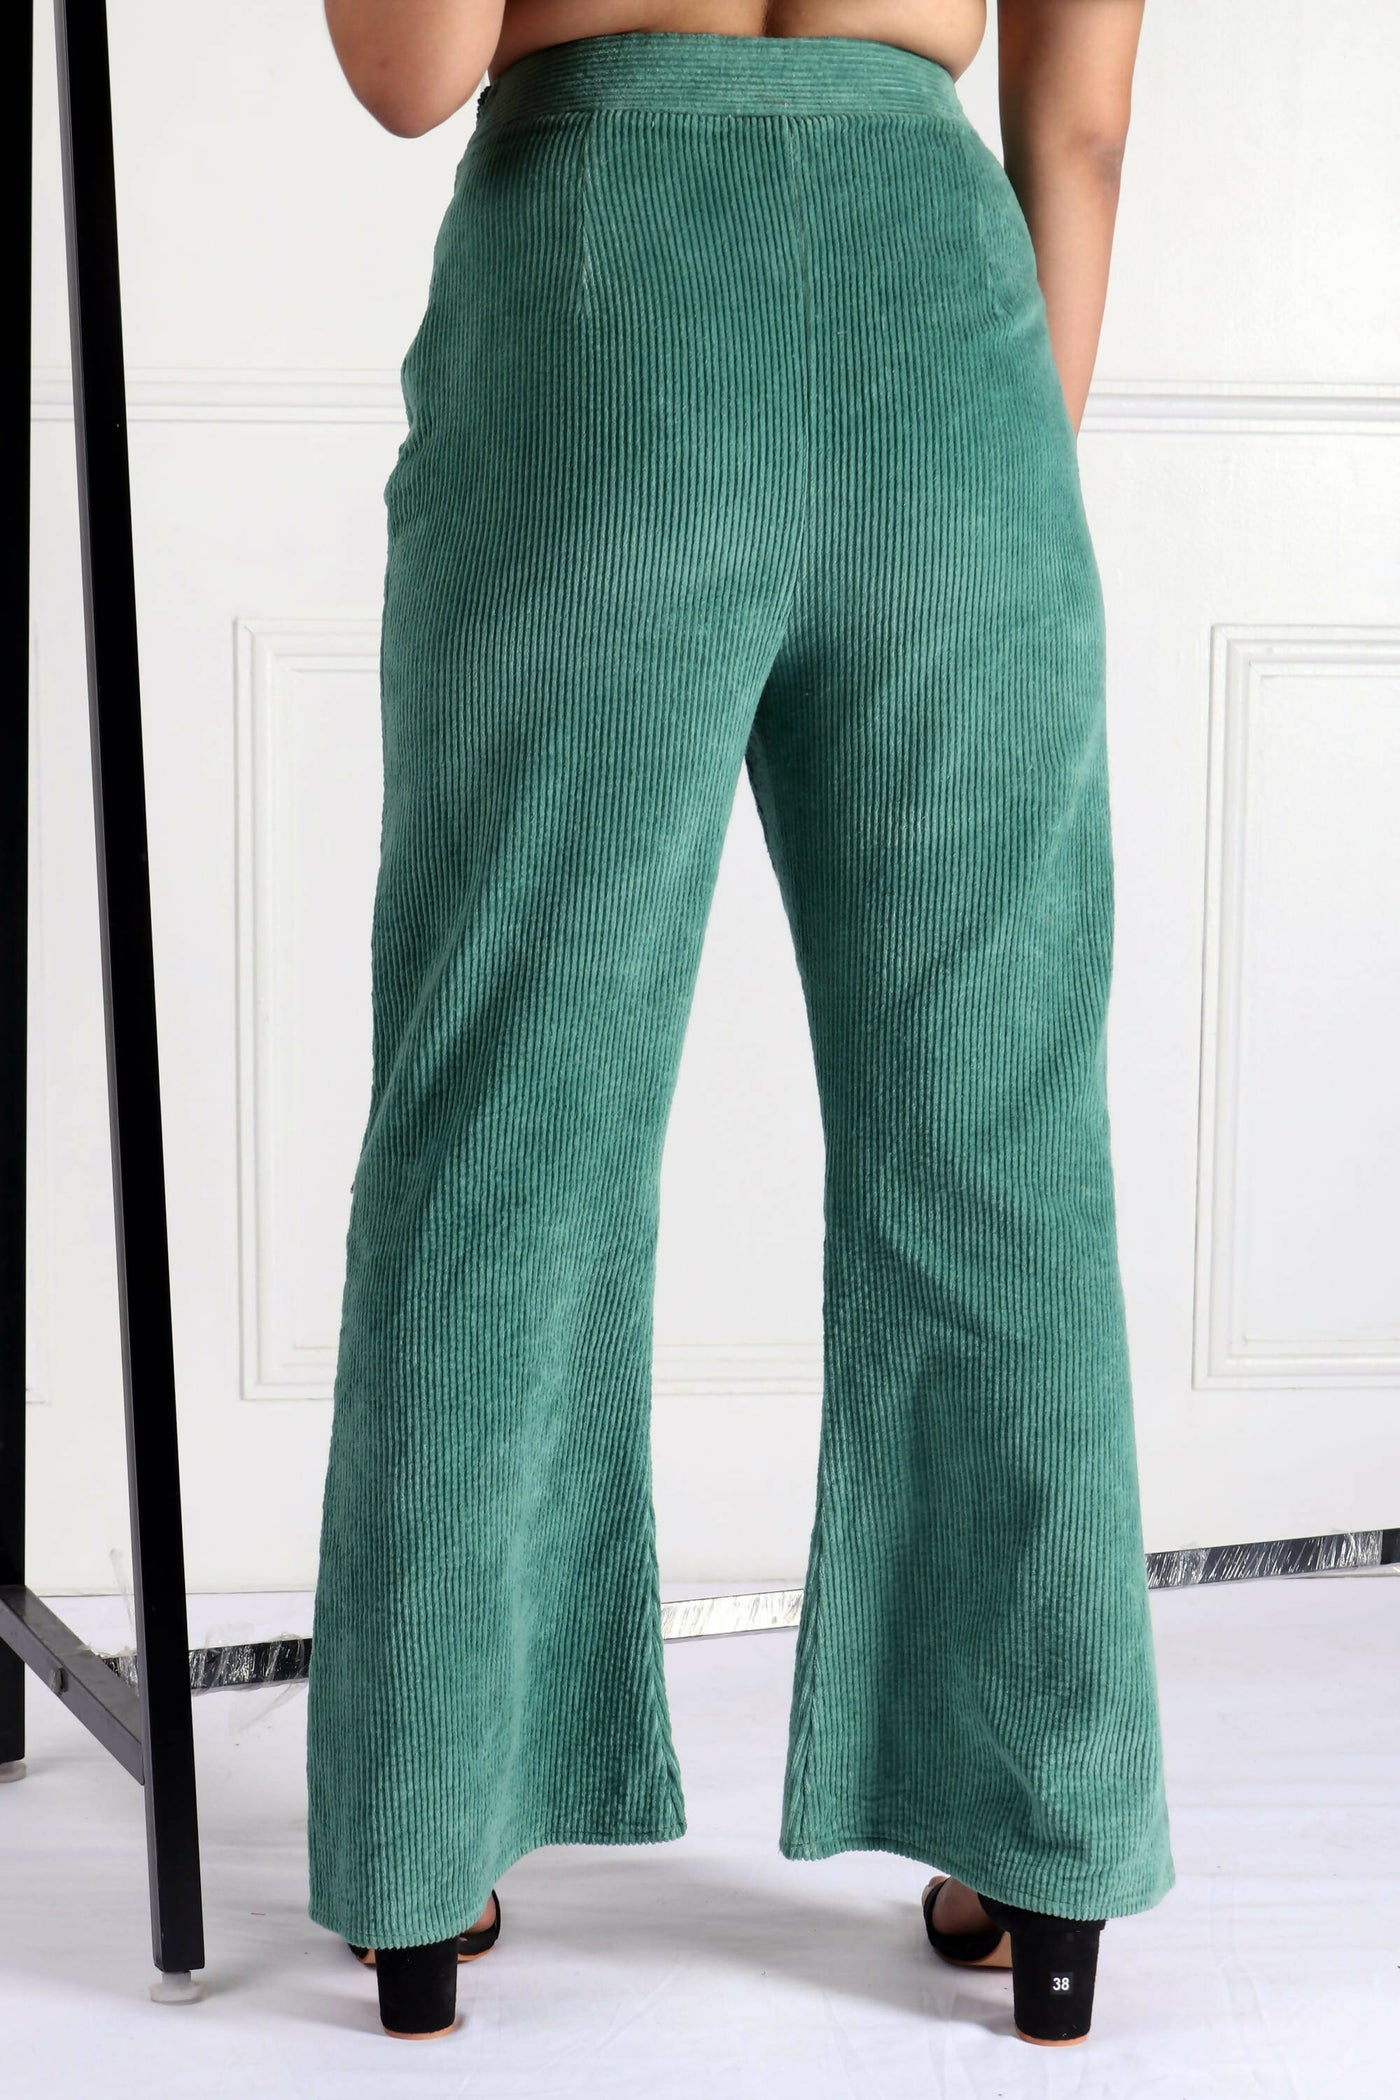 Lea Myrtle Green Corduroy Pants